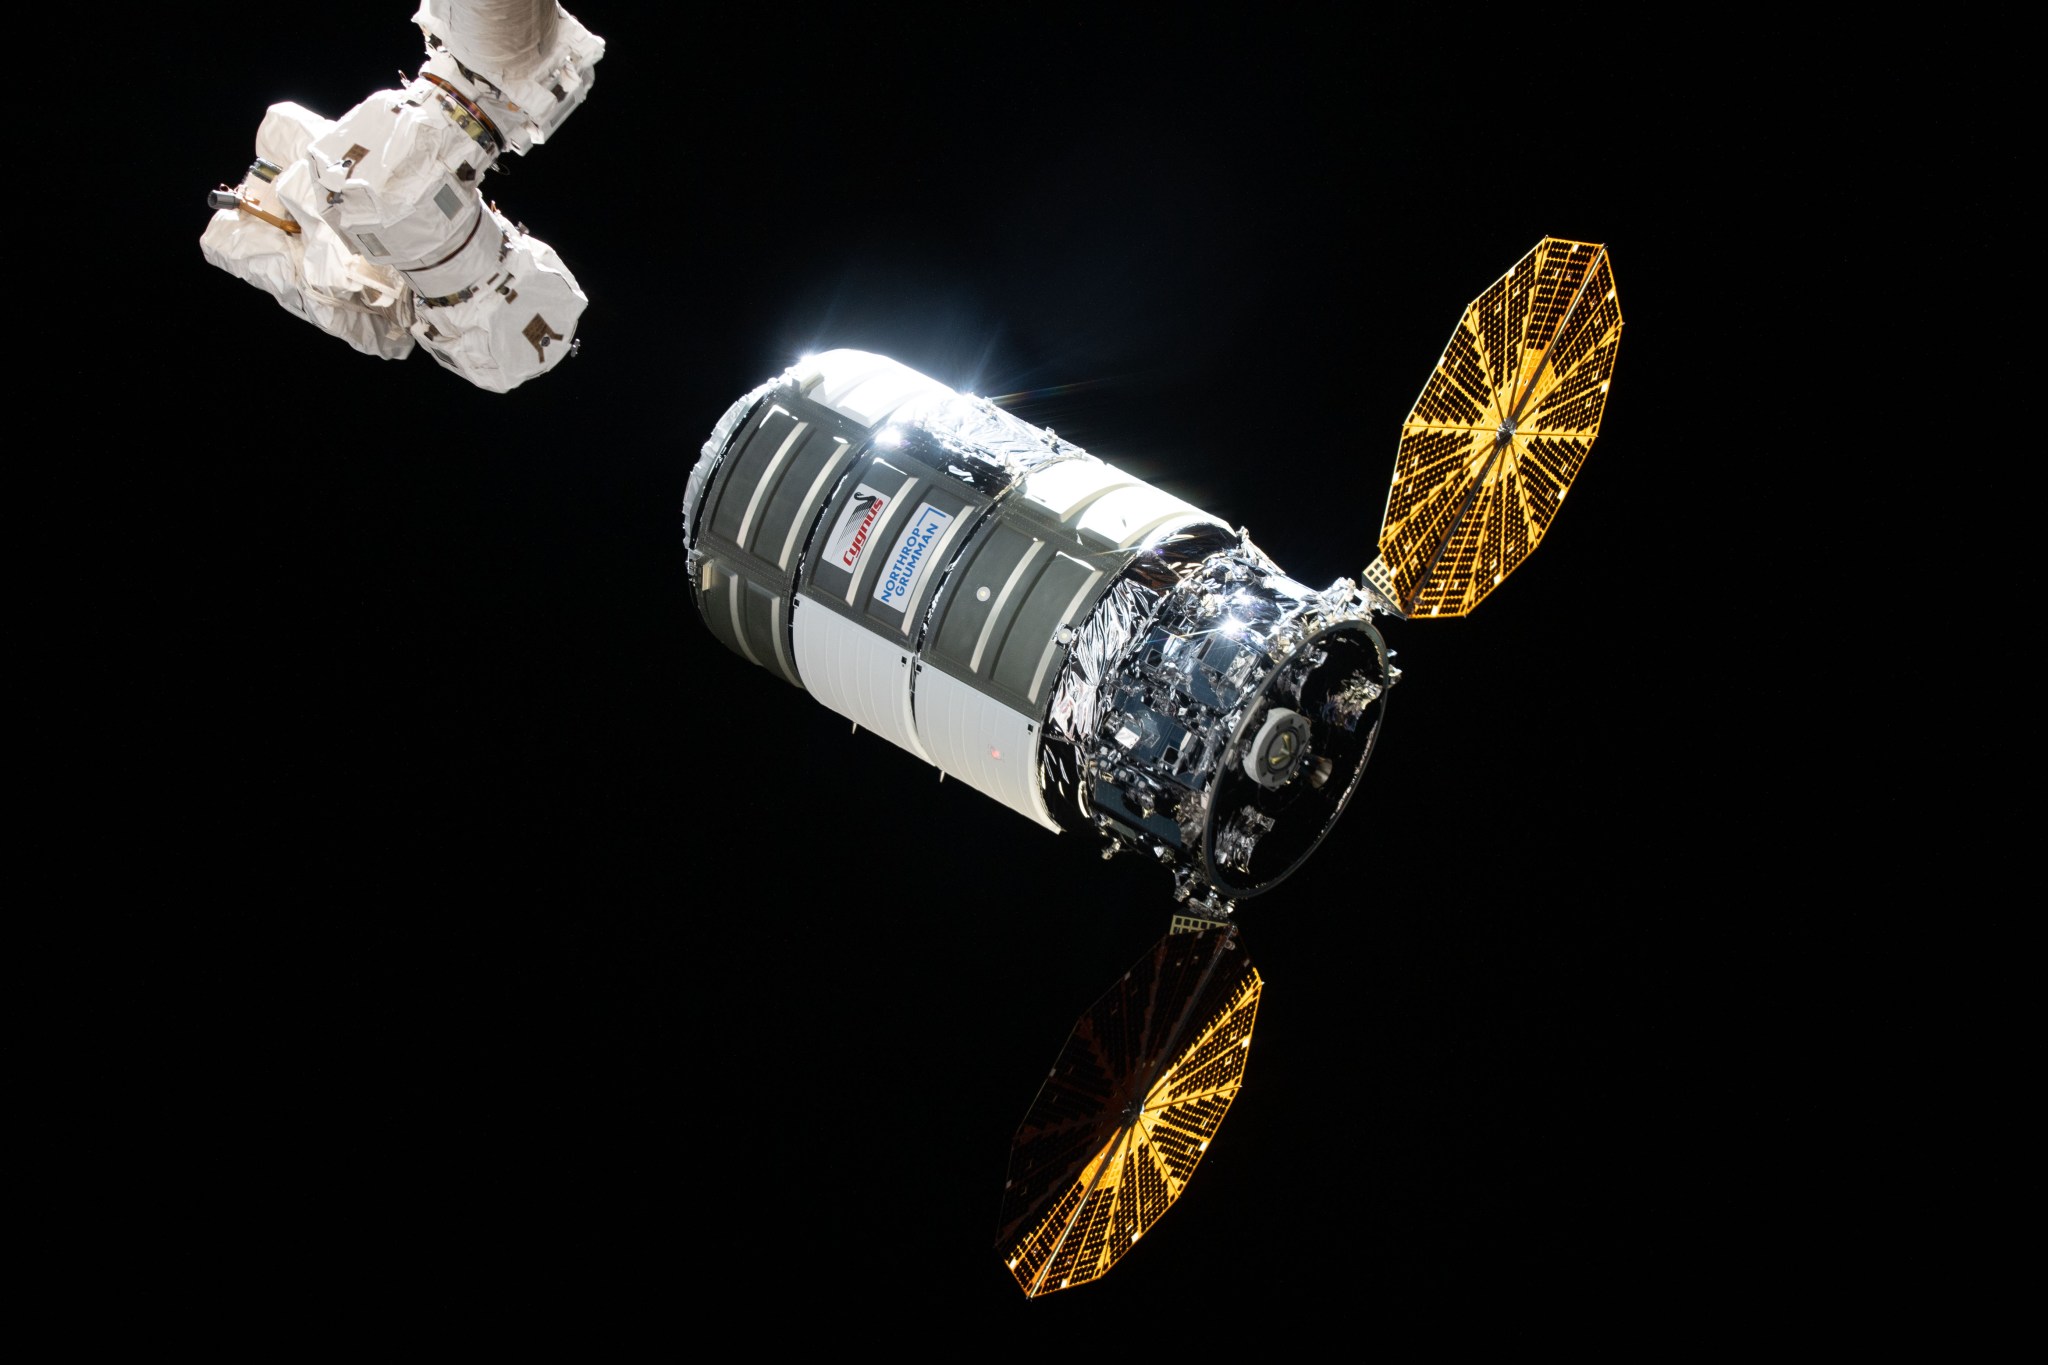 Image of Northrop Grumman’s Cygnus resupply spacecraft.